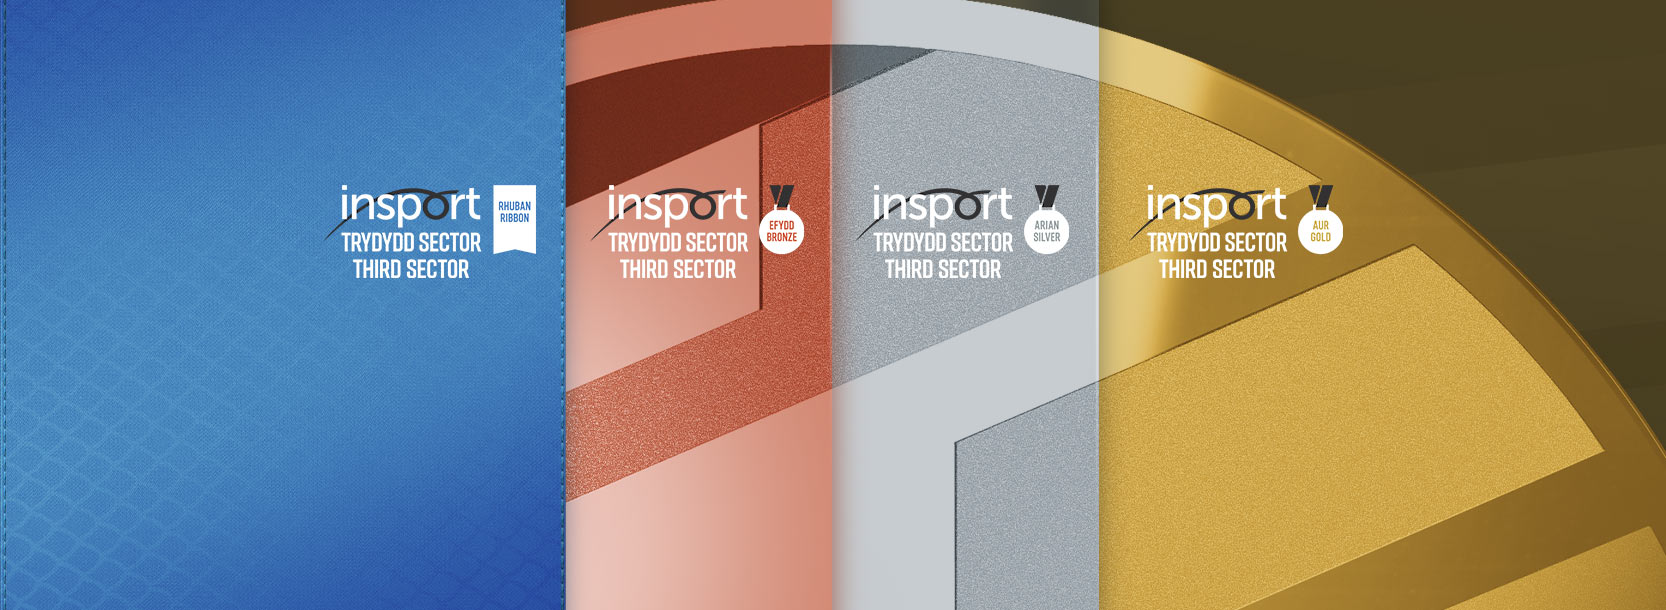 insport Third Sector logos